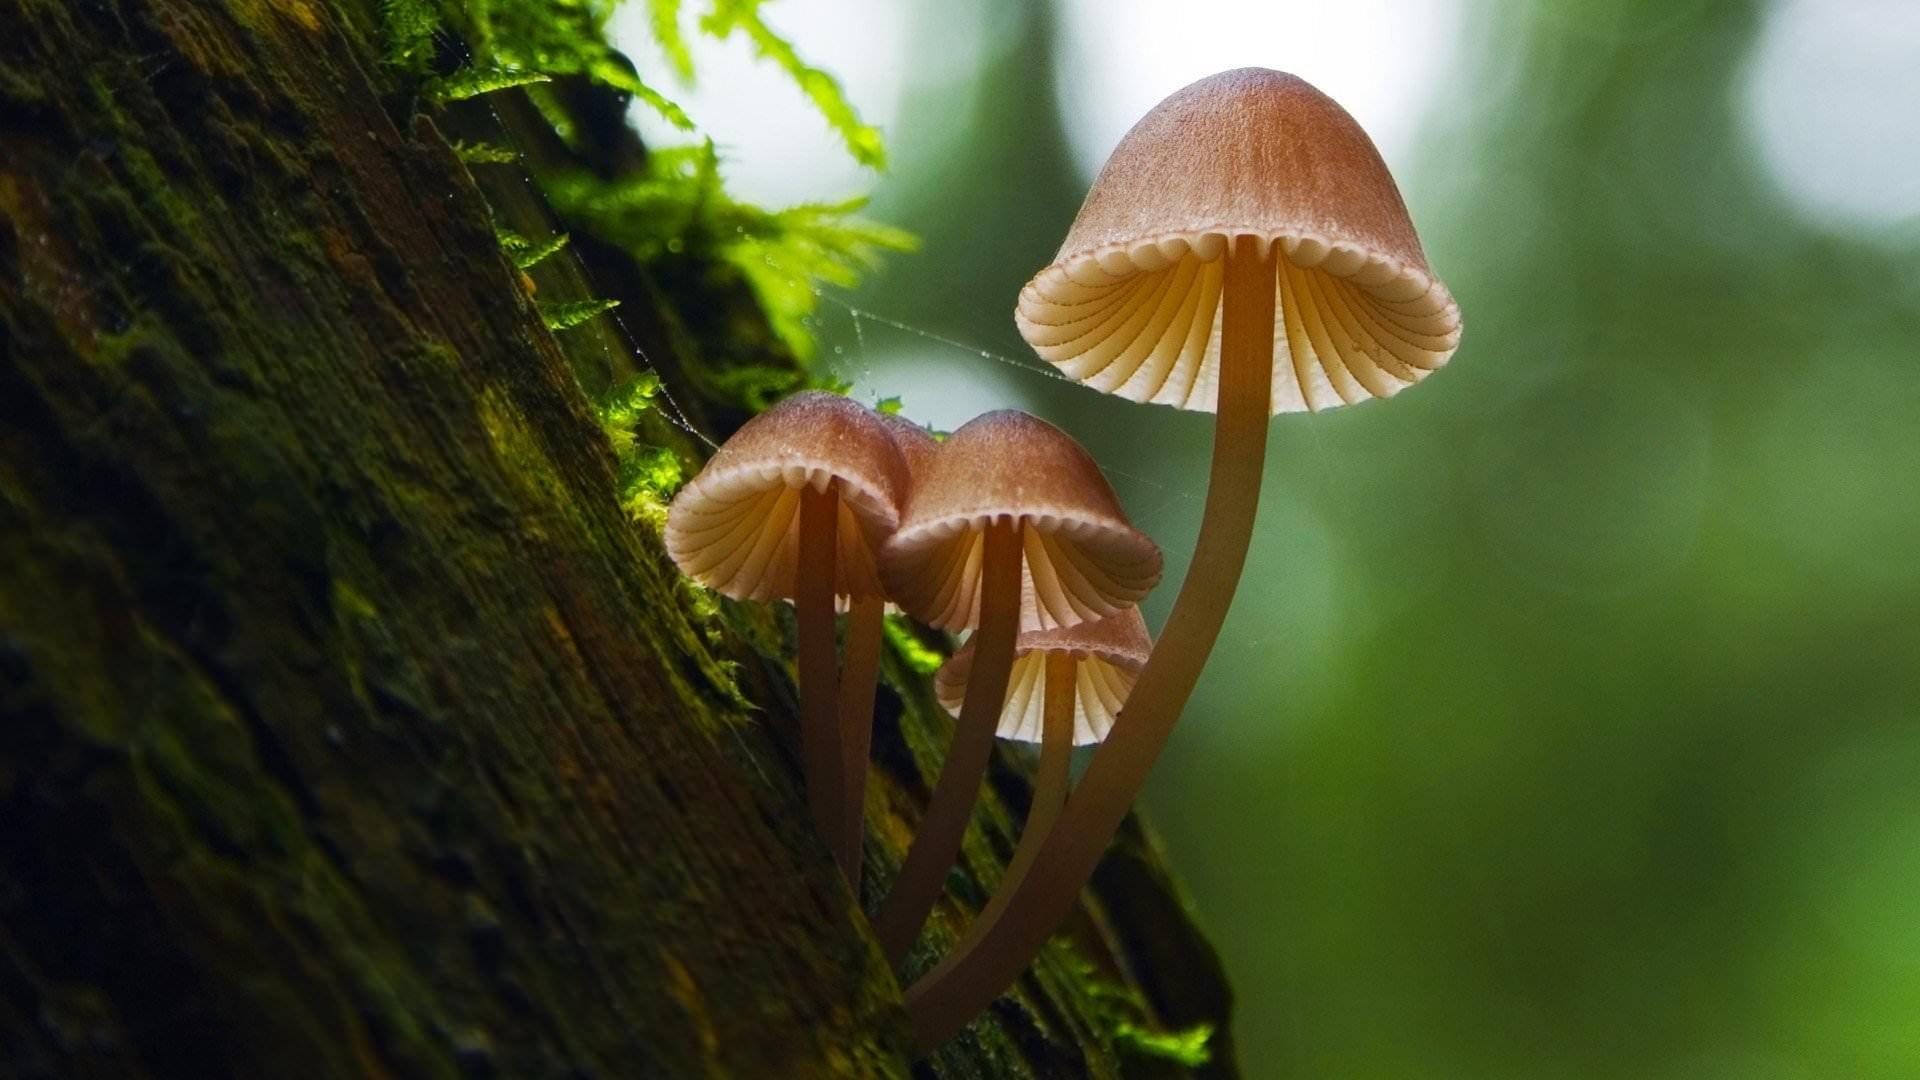 Fantastic Fungi backdrop